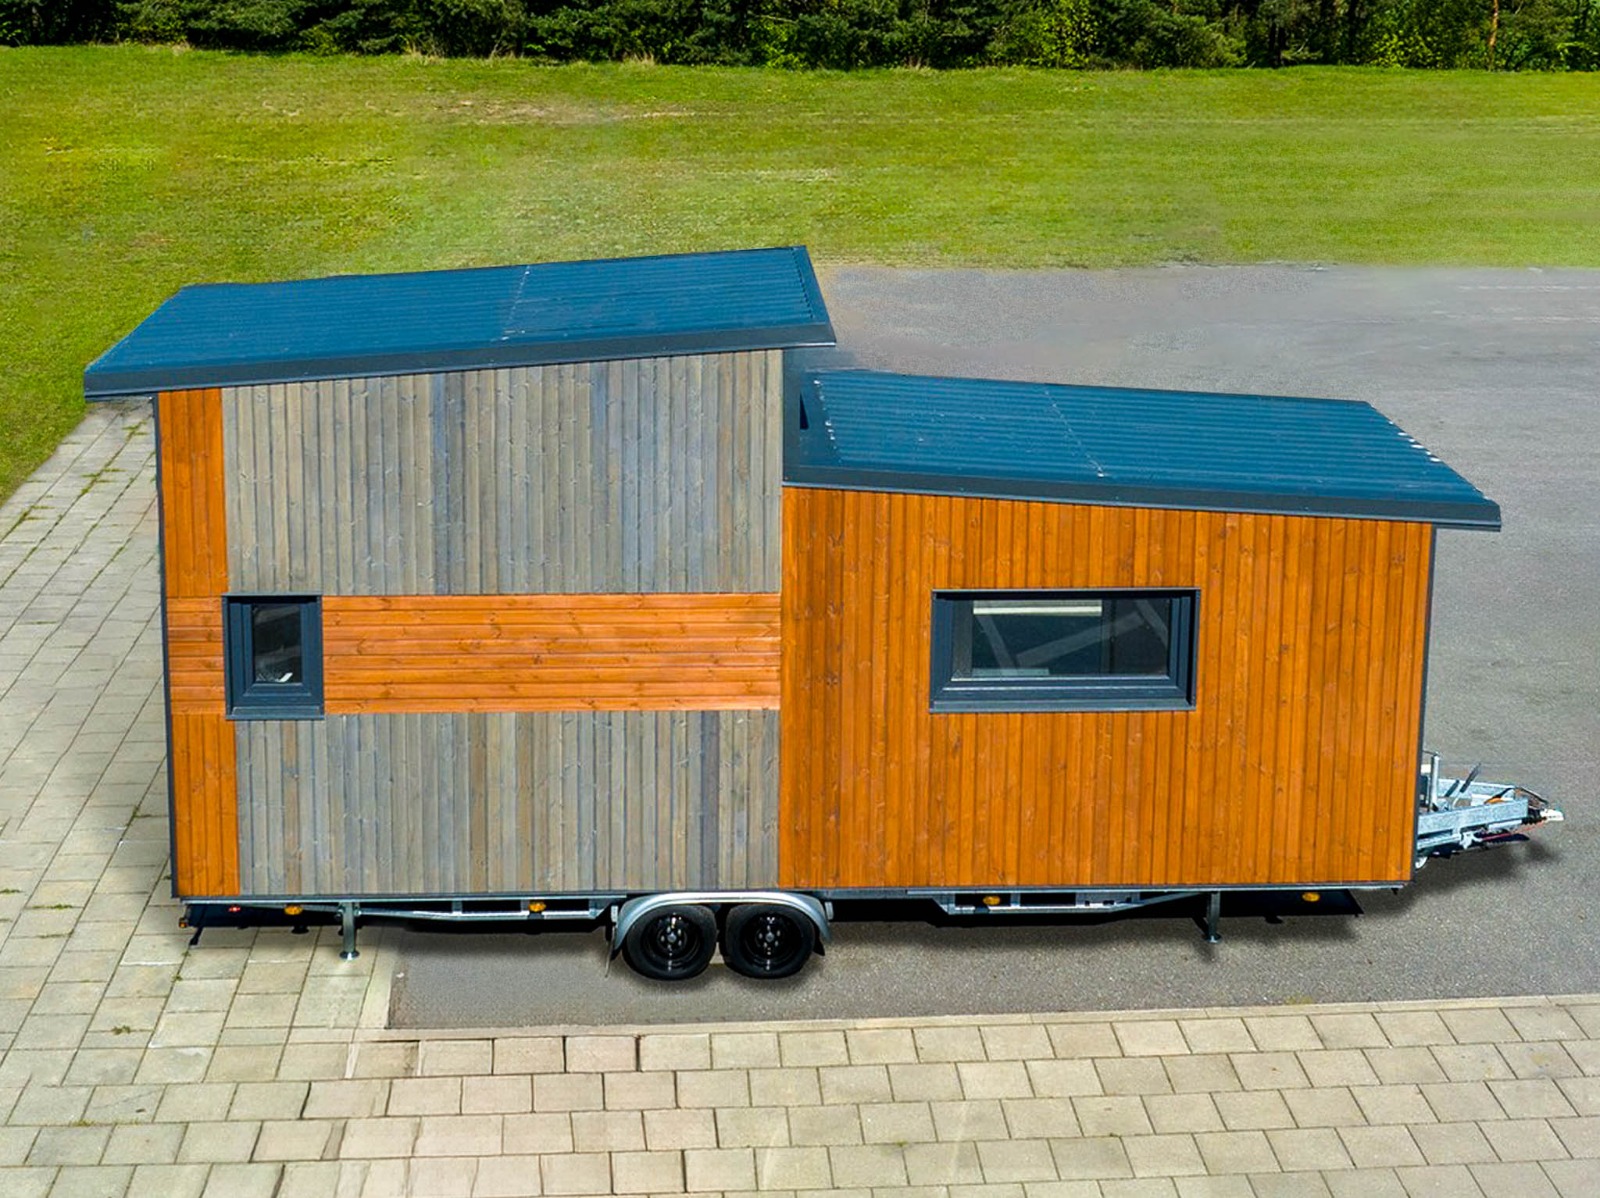 Tiny house, mobile homes, caravans, 25 m2  - Eco Life Model